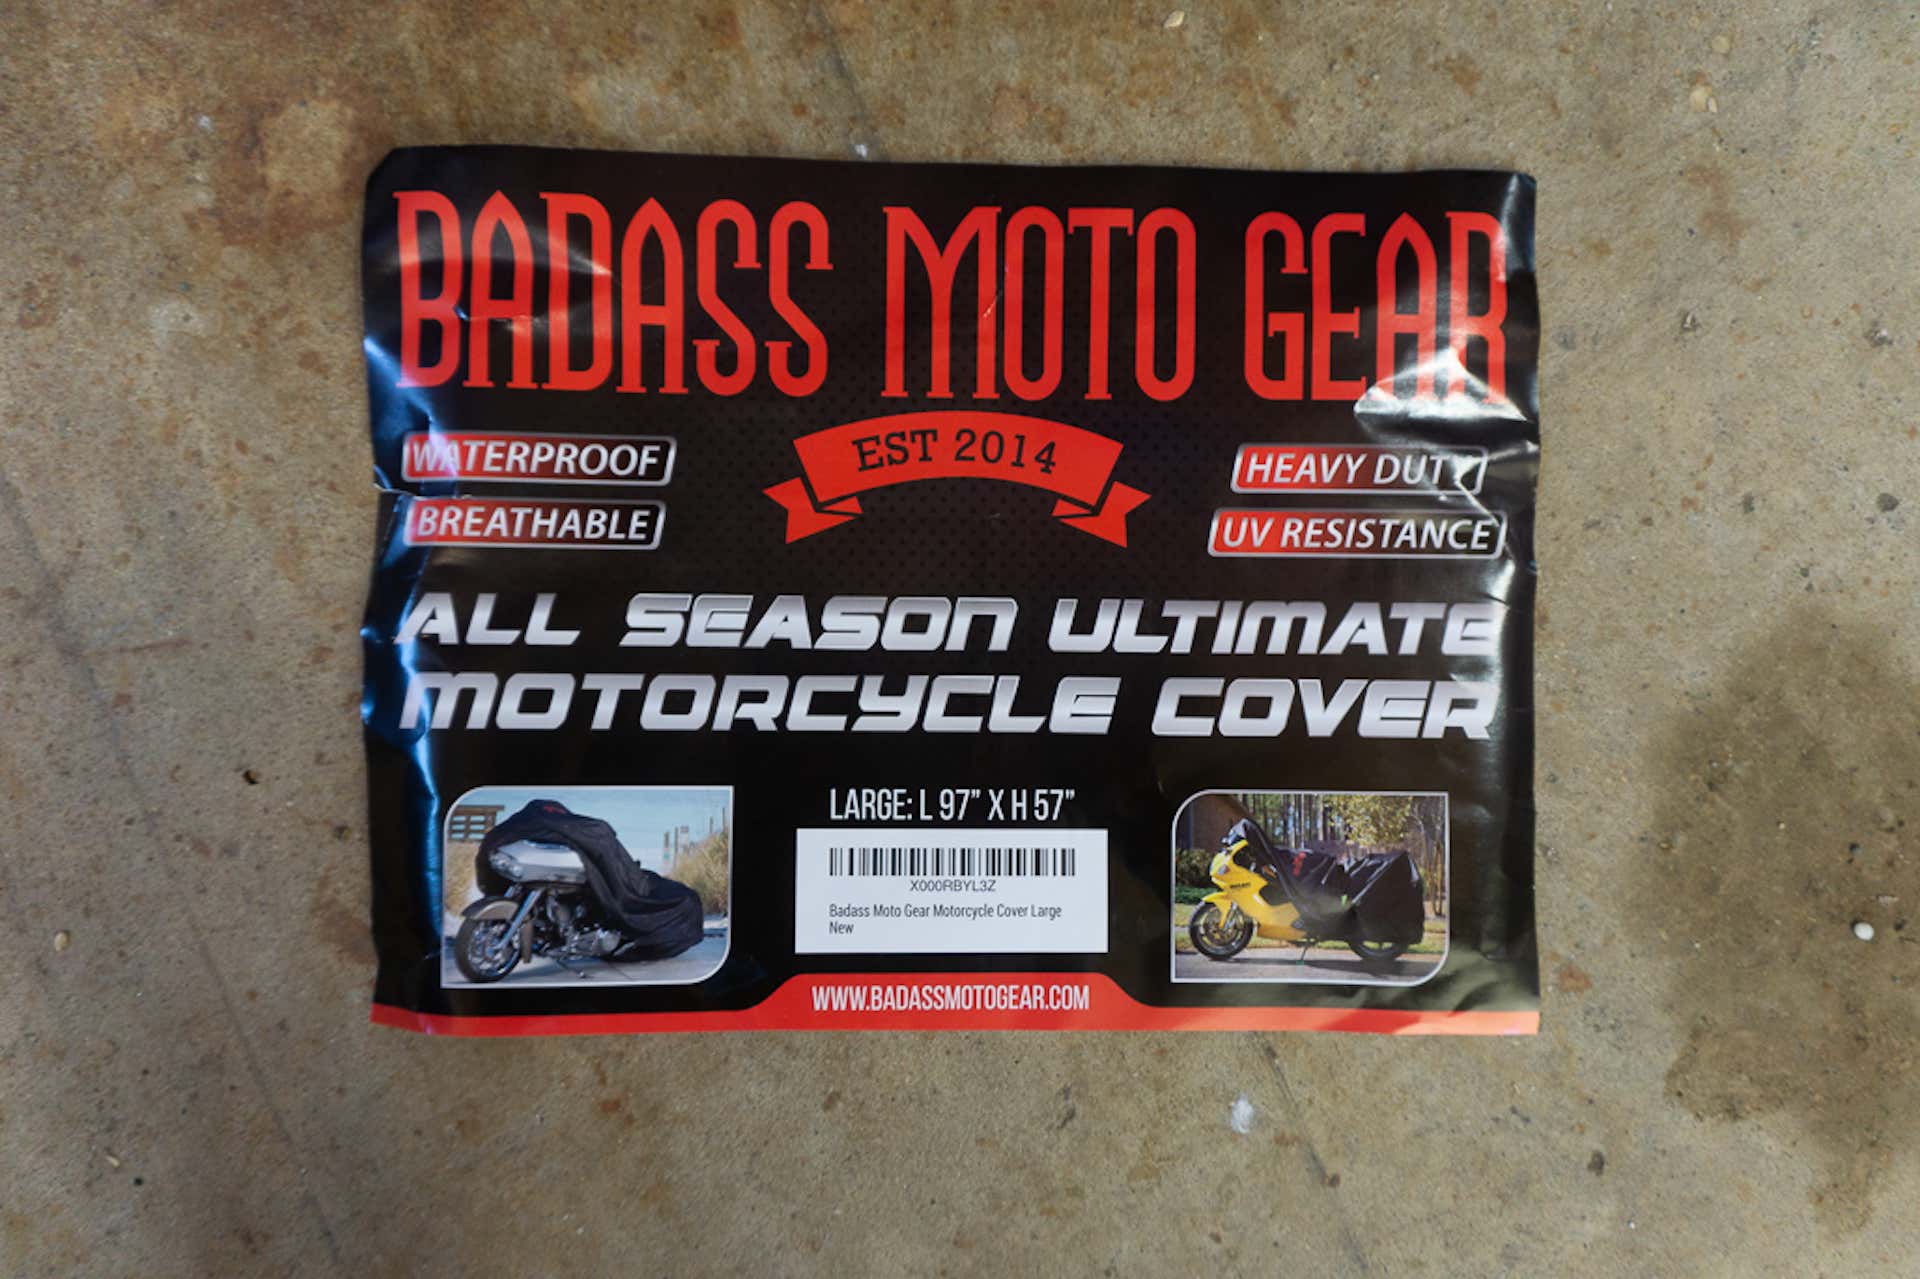 Badass Moto Gear全季终极摩托车封面案例。